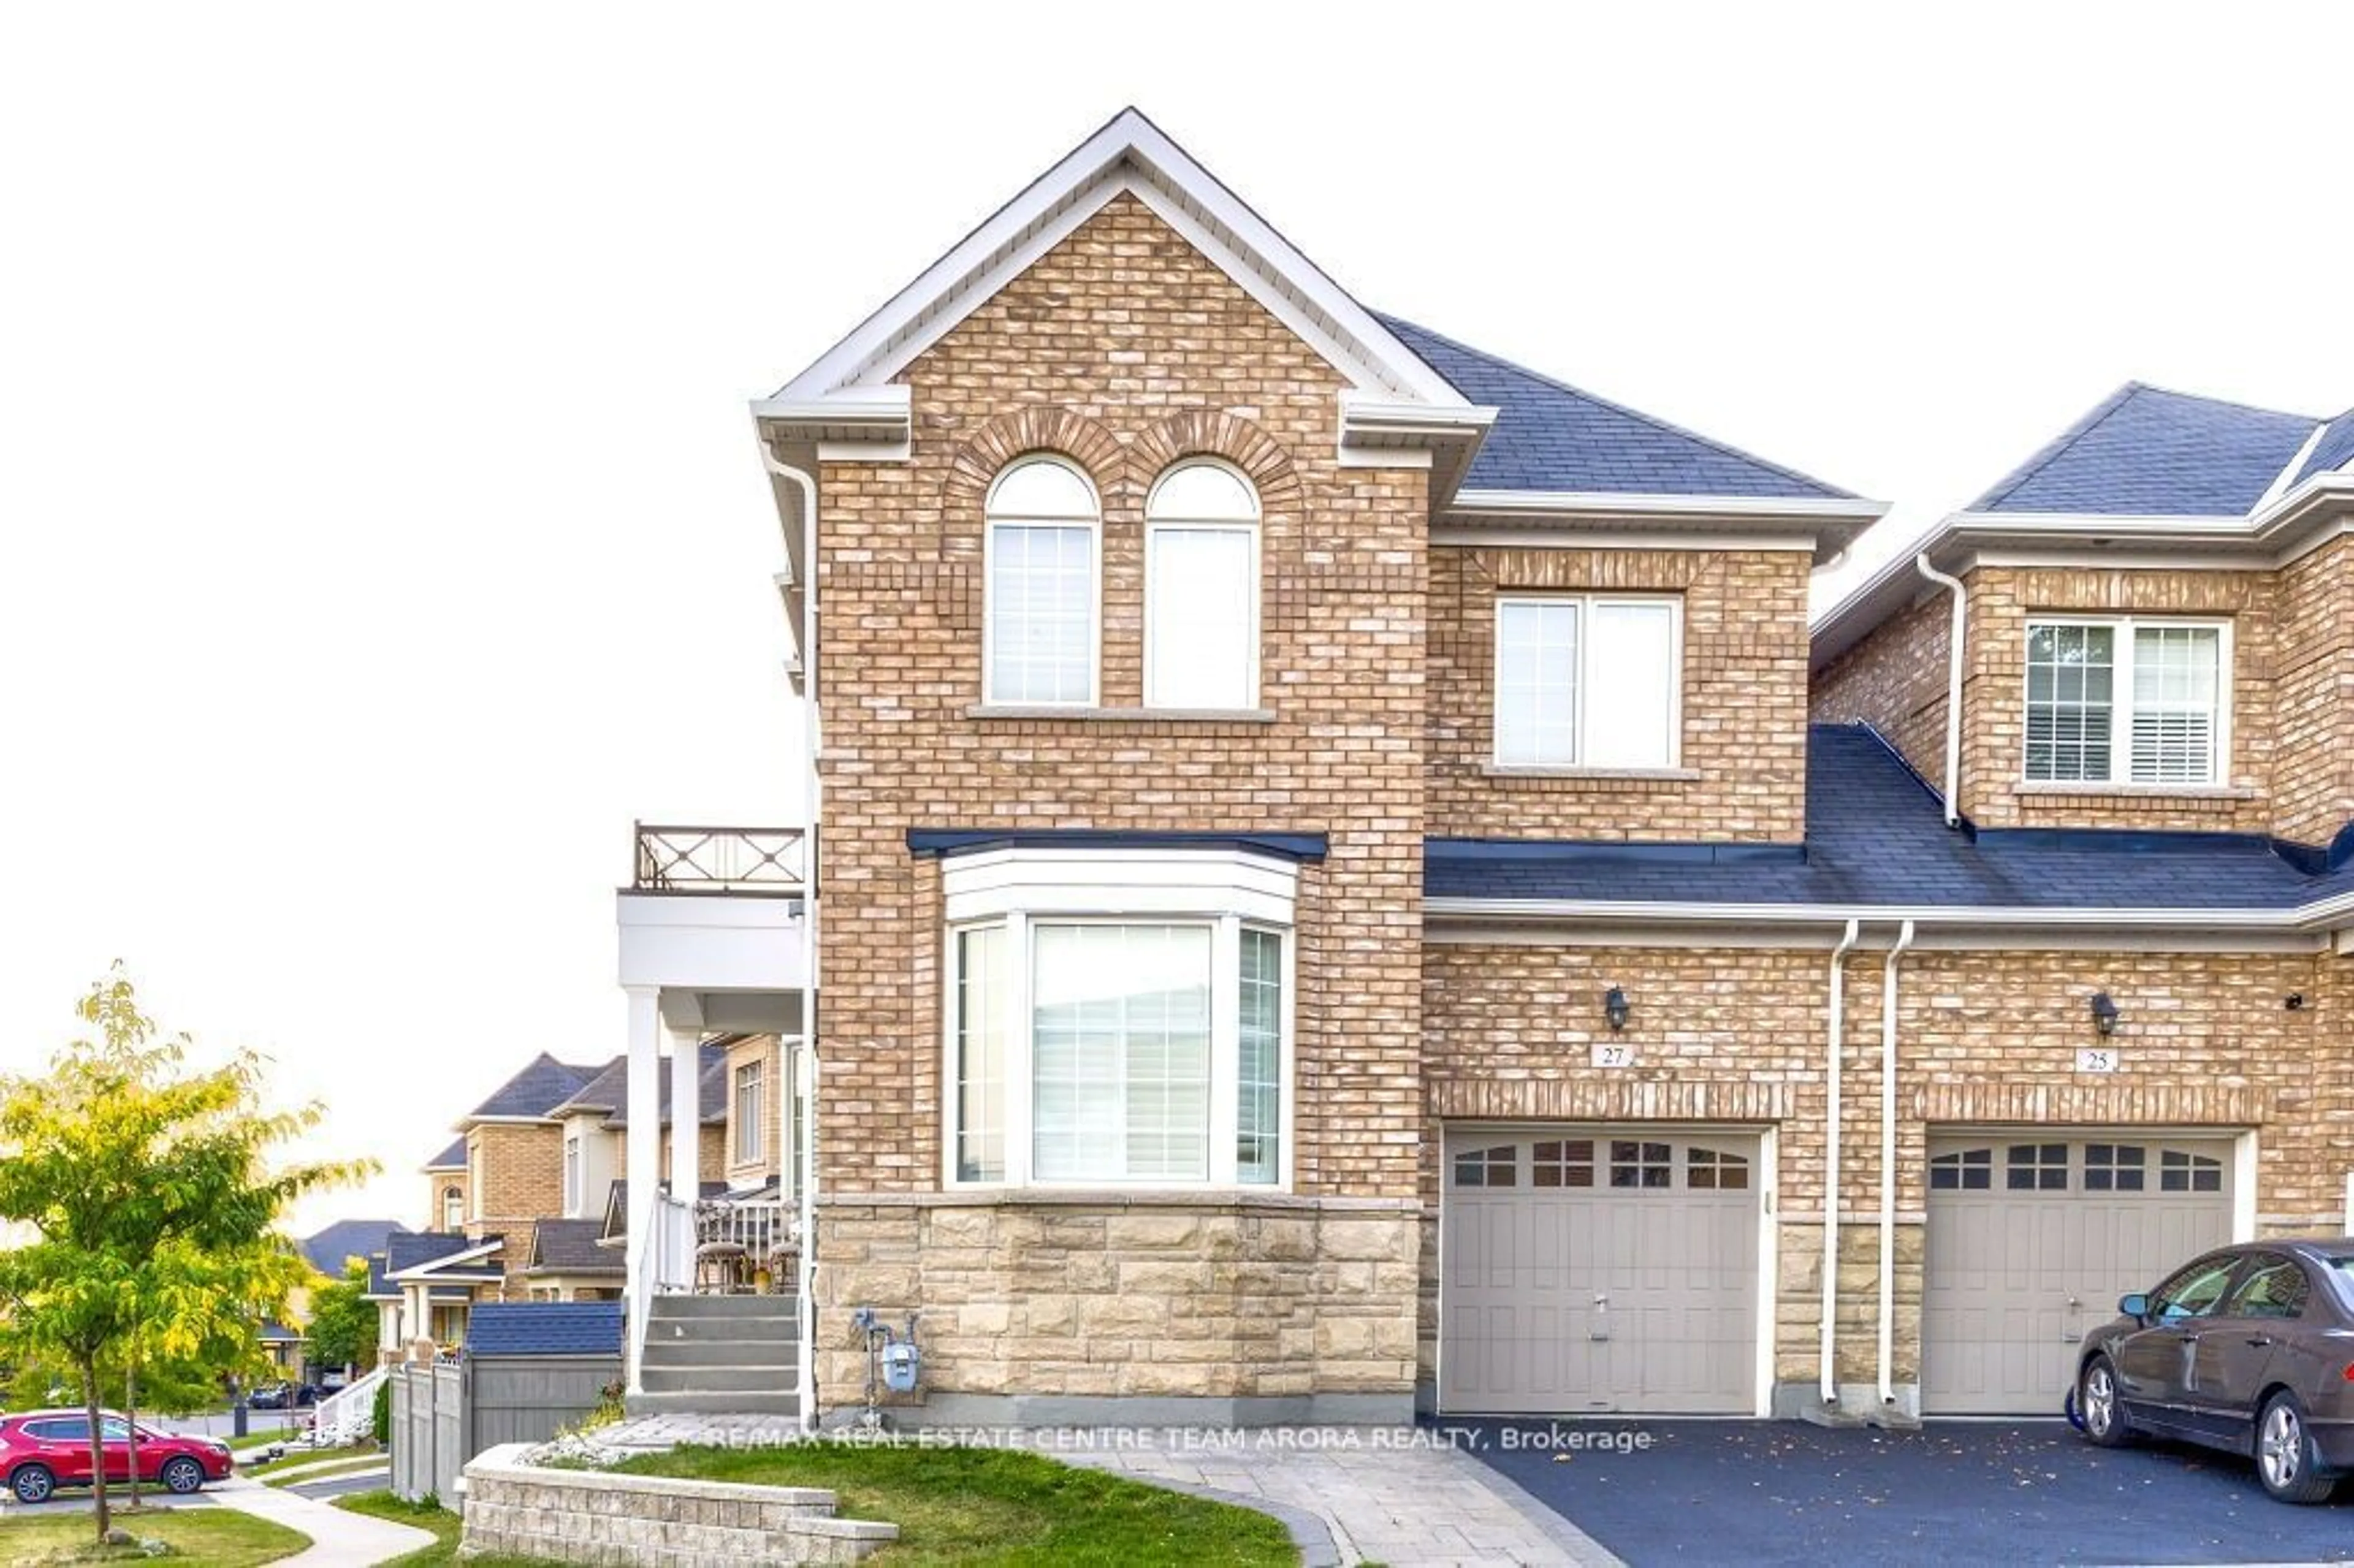 Home with brick exterior material for 27 Cranwood Circ, Brampton Ontario L6Y 0Y4